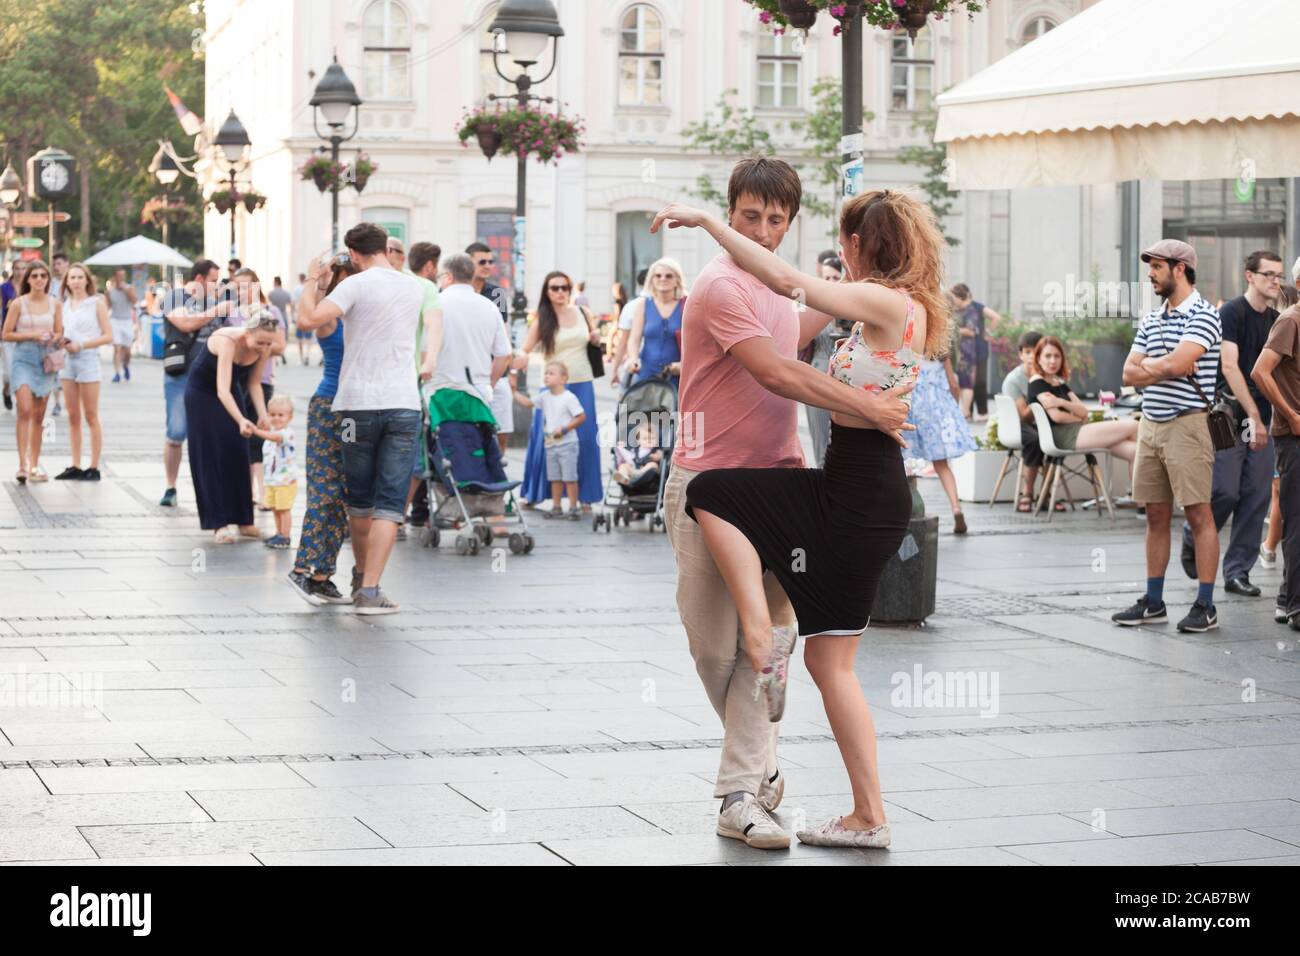 BELGRADE, SERBIA - SEPTEMBER 2, 2018: Couple, a man and a woman, dancing tango as a demo in the city center of Belgrade, on the main pedestrain street Stock Photo